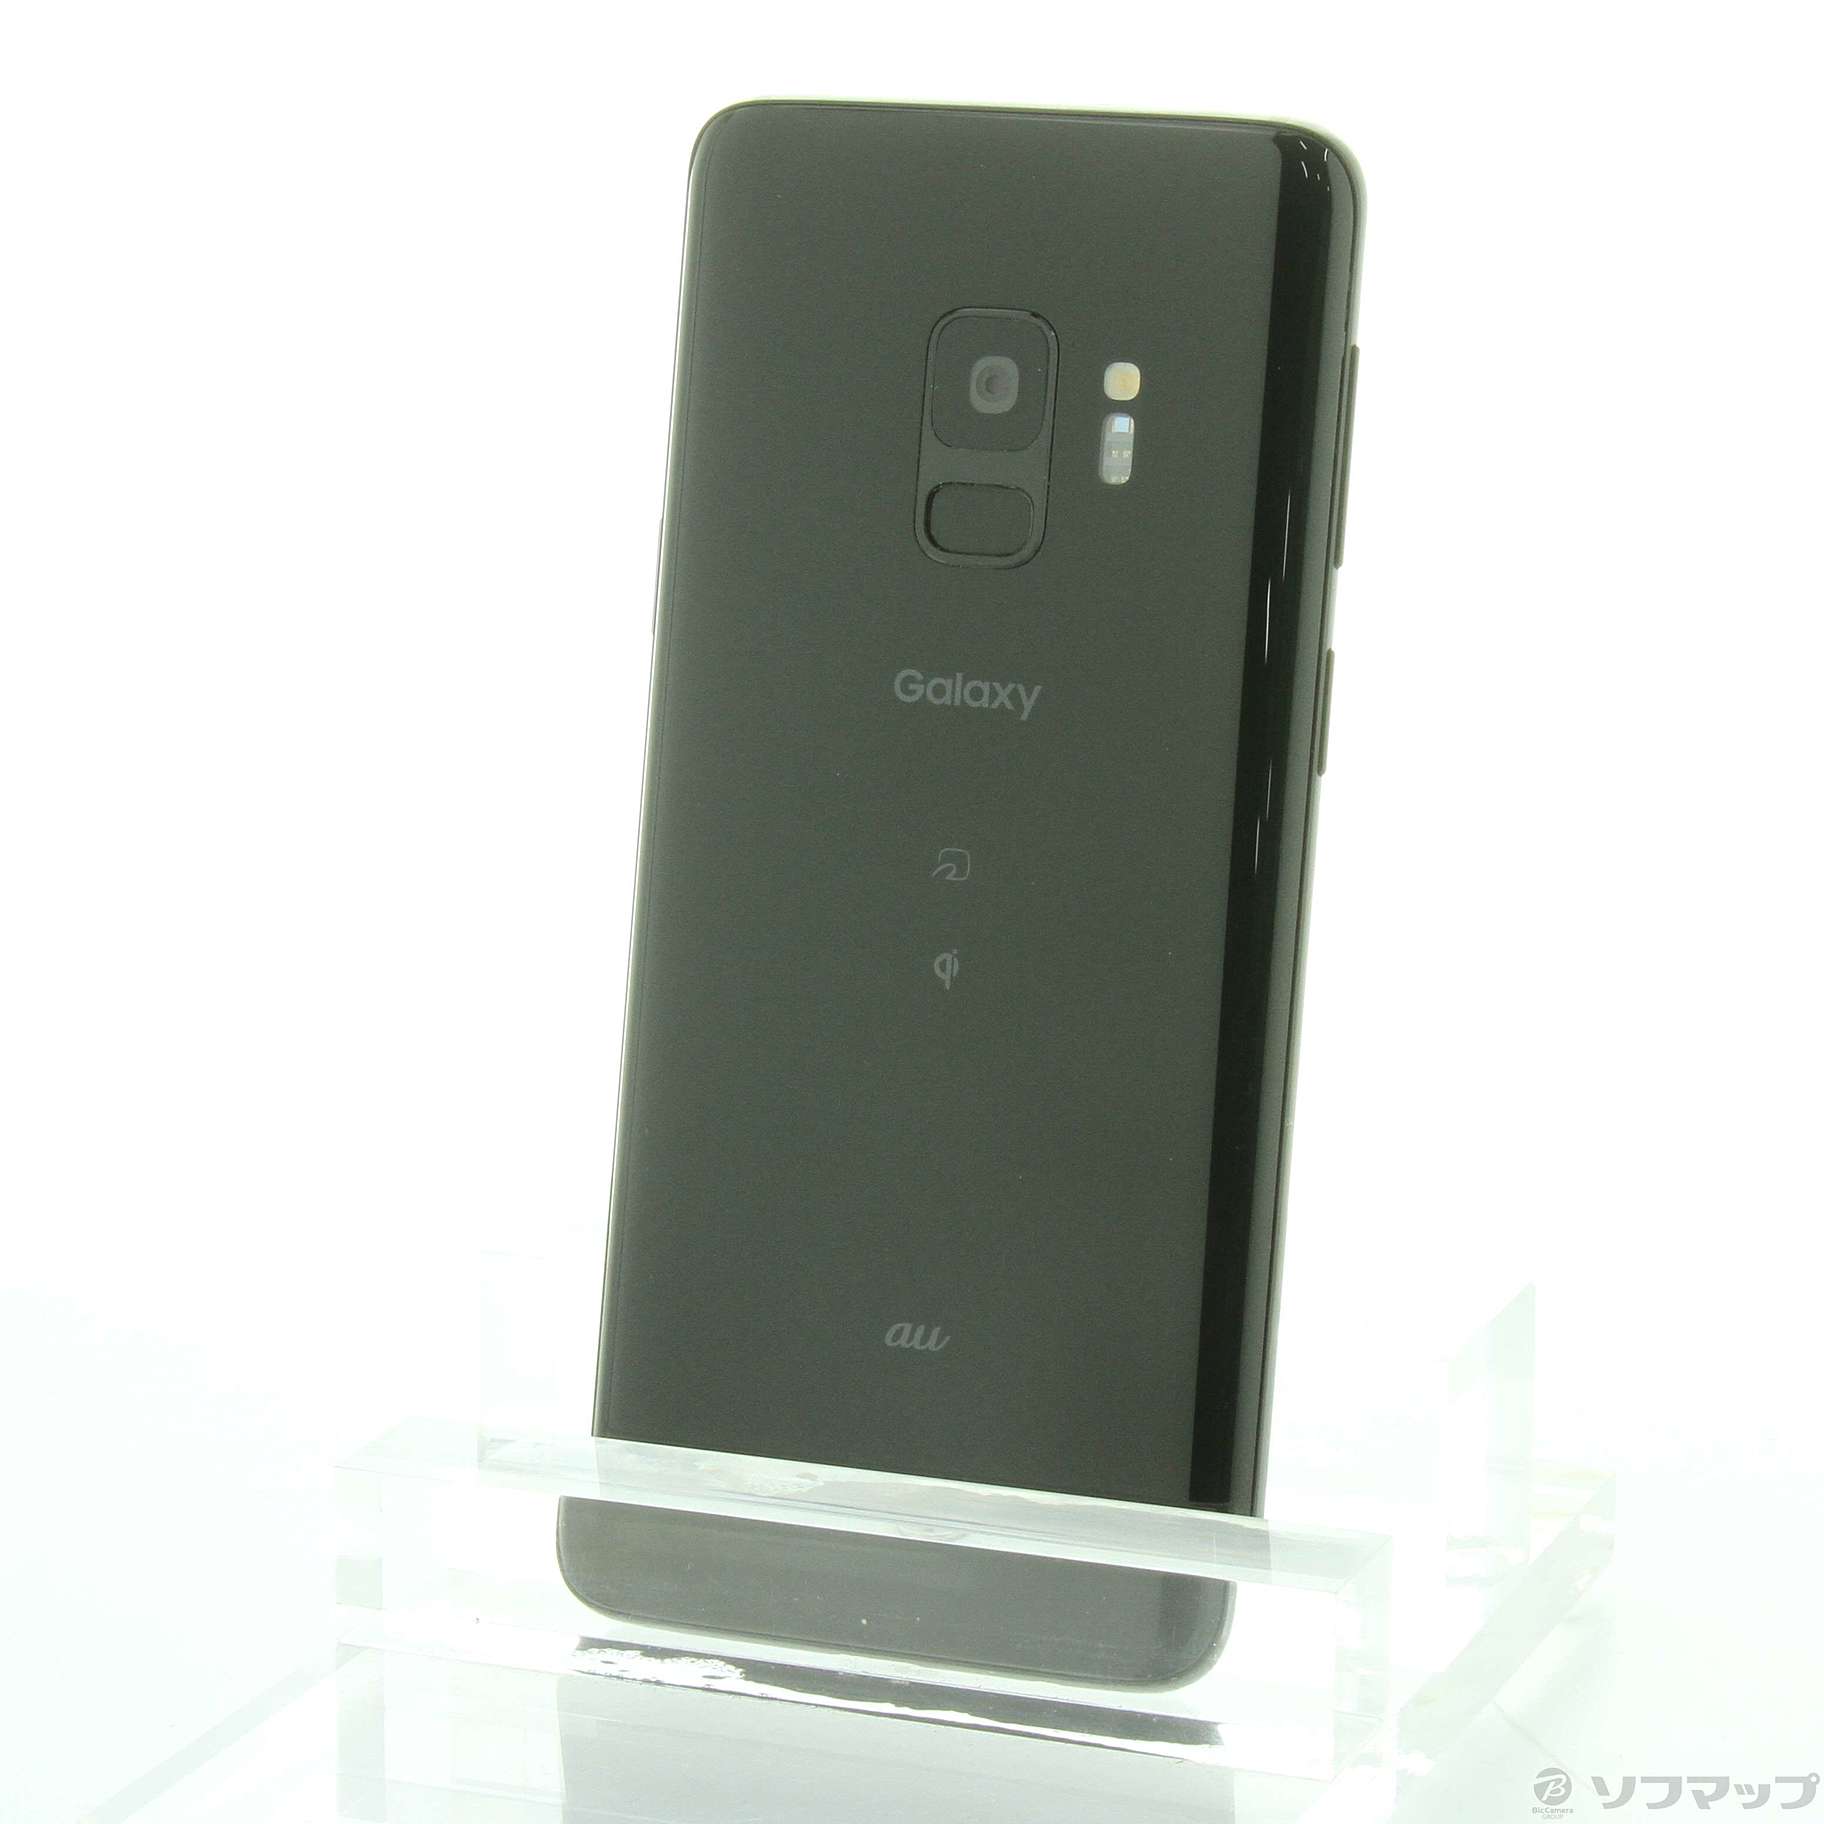 SIMフリー Galaxy S9 SCV38 ブラック